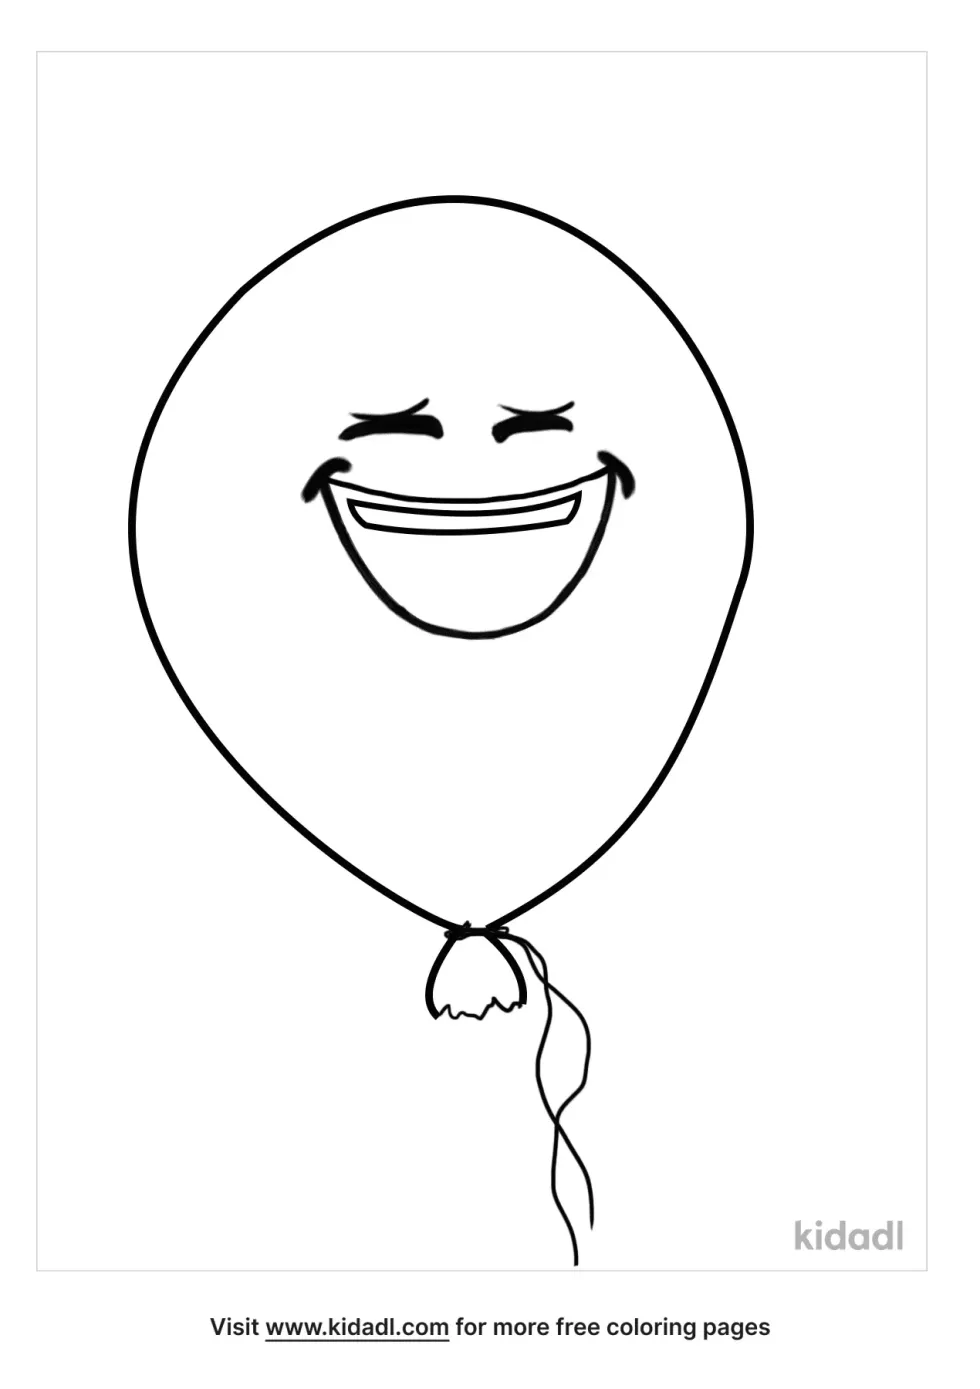 Balloon With Face